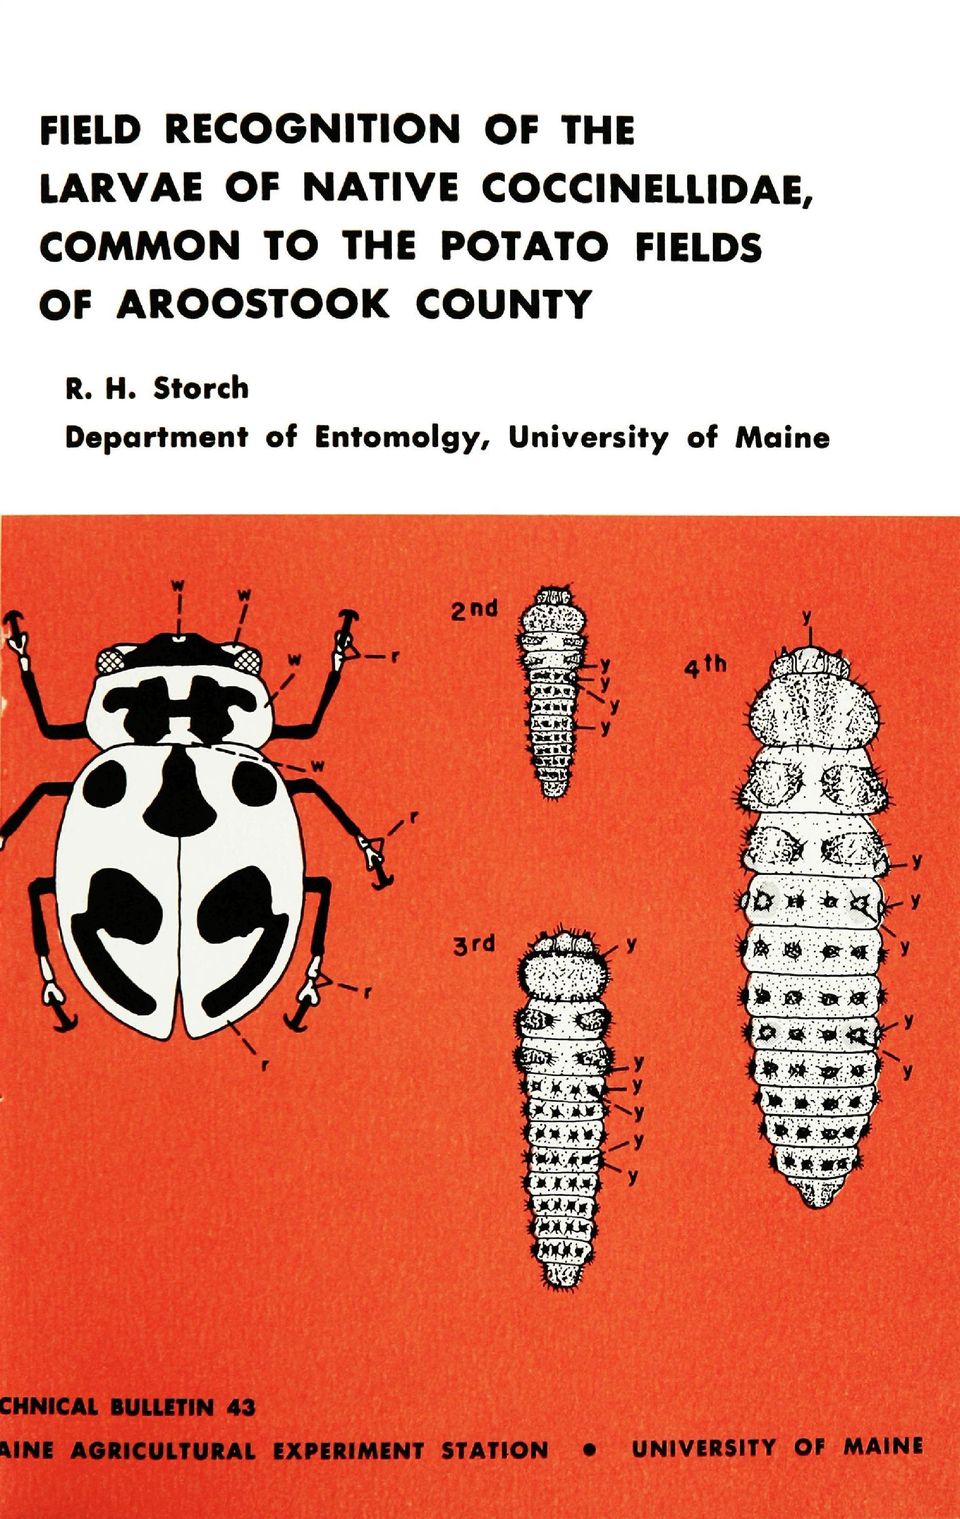 Storch Department of Entomolgy, University of Maine